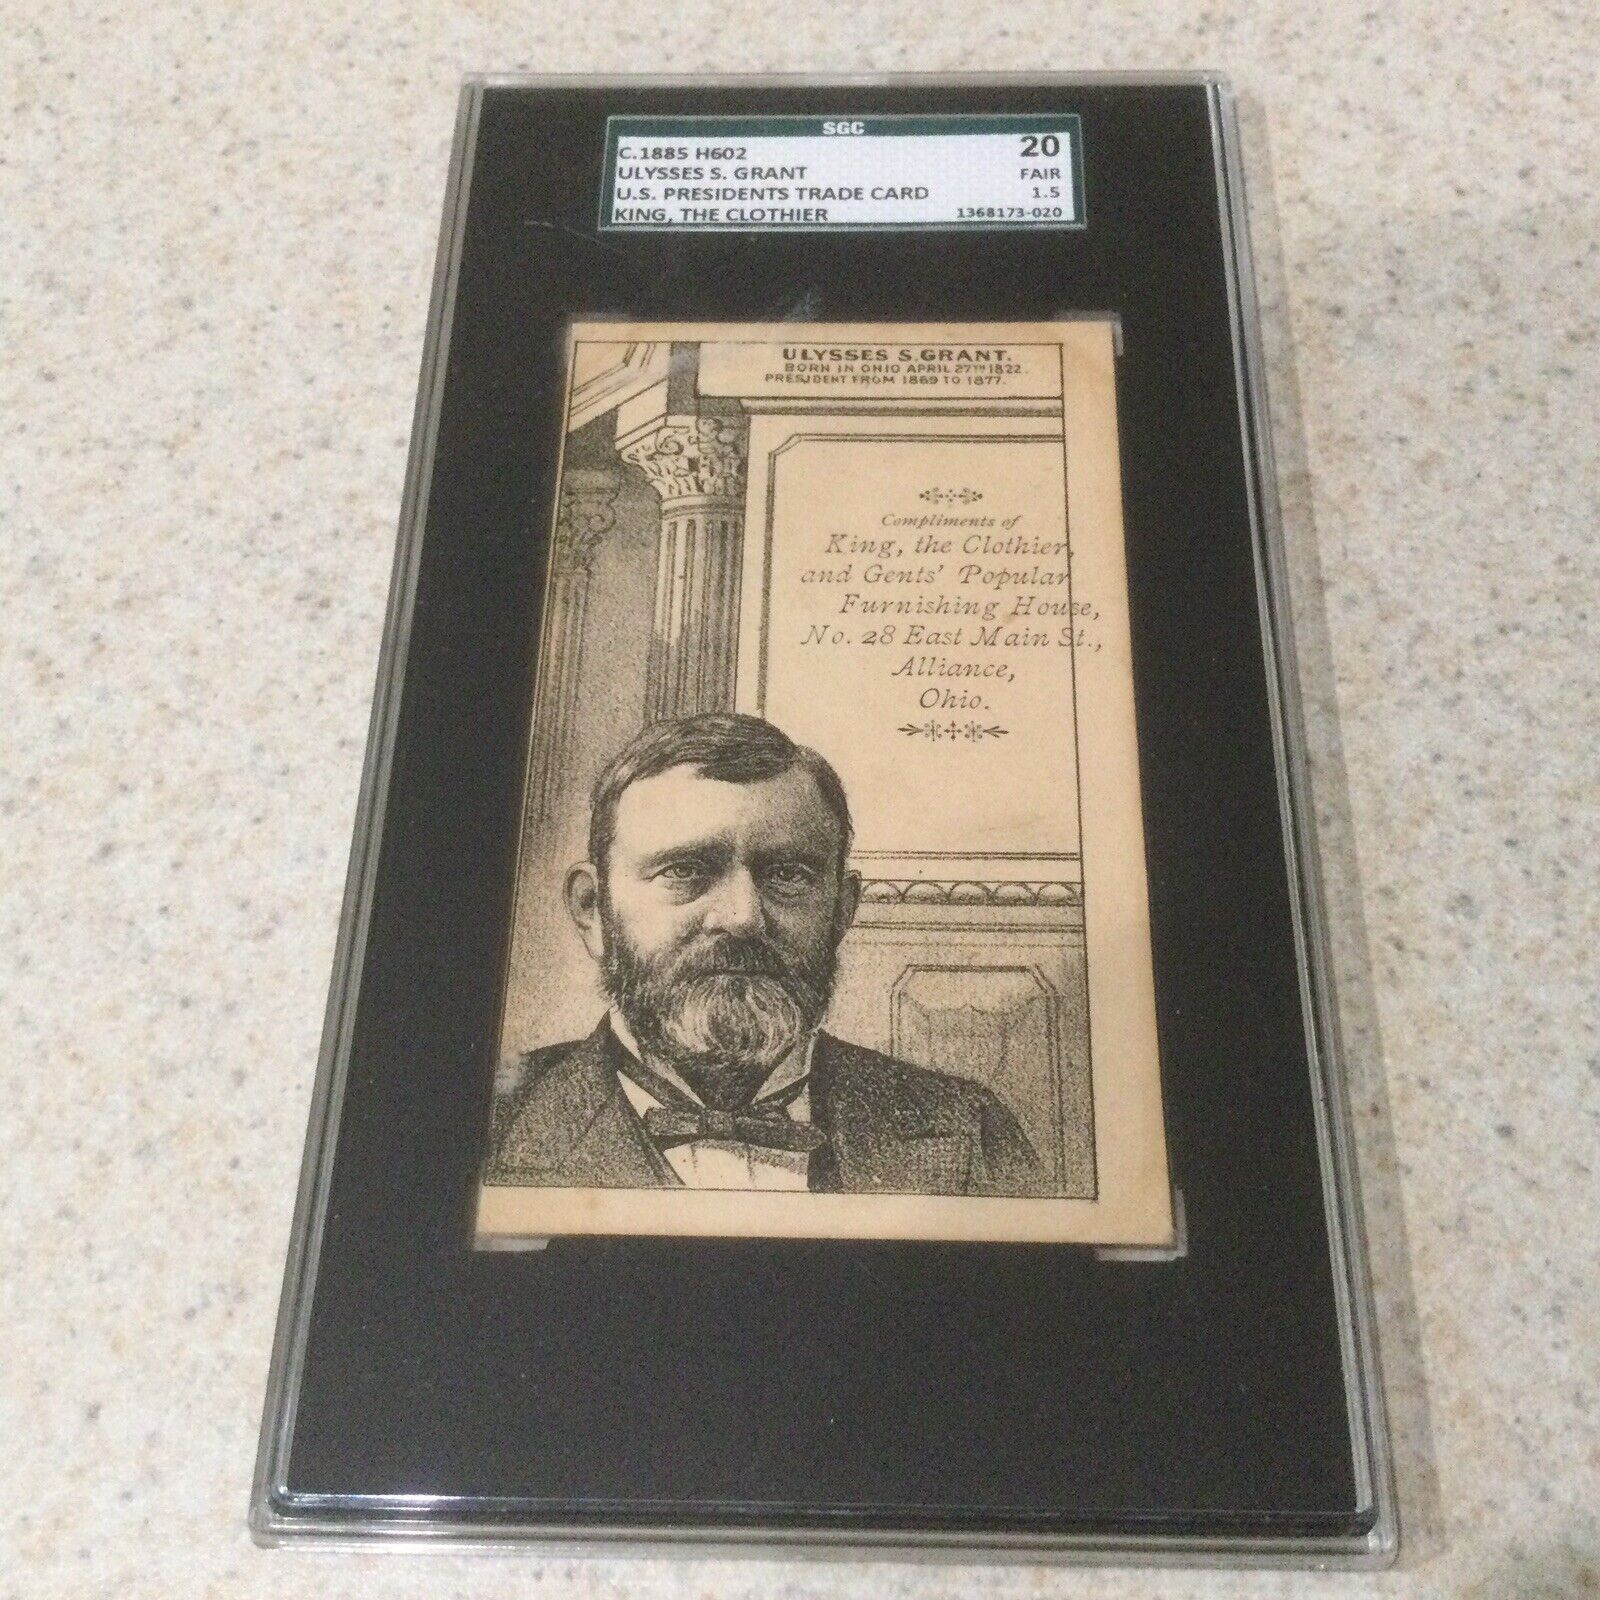 c.1885 H602 U.S. Presidents Trade Card - Ulysses S Grant SGC FAIR 1.5